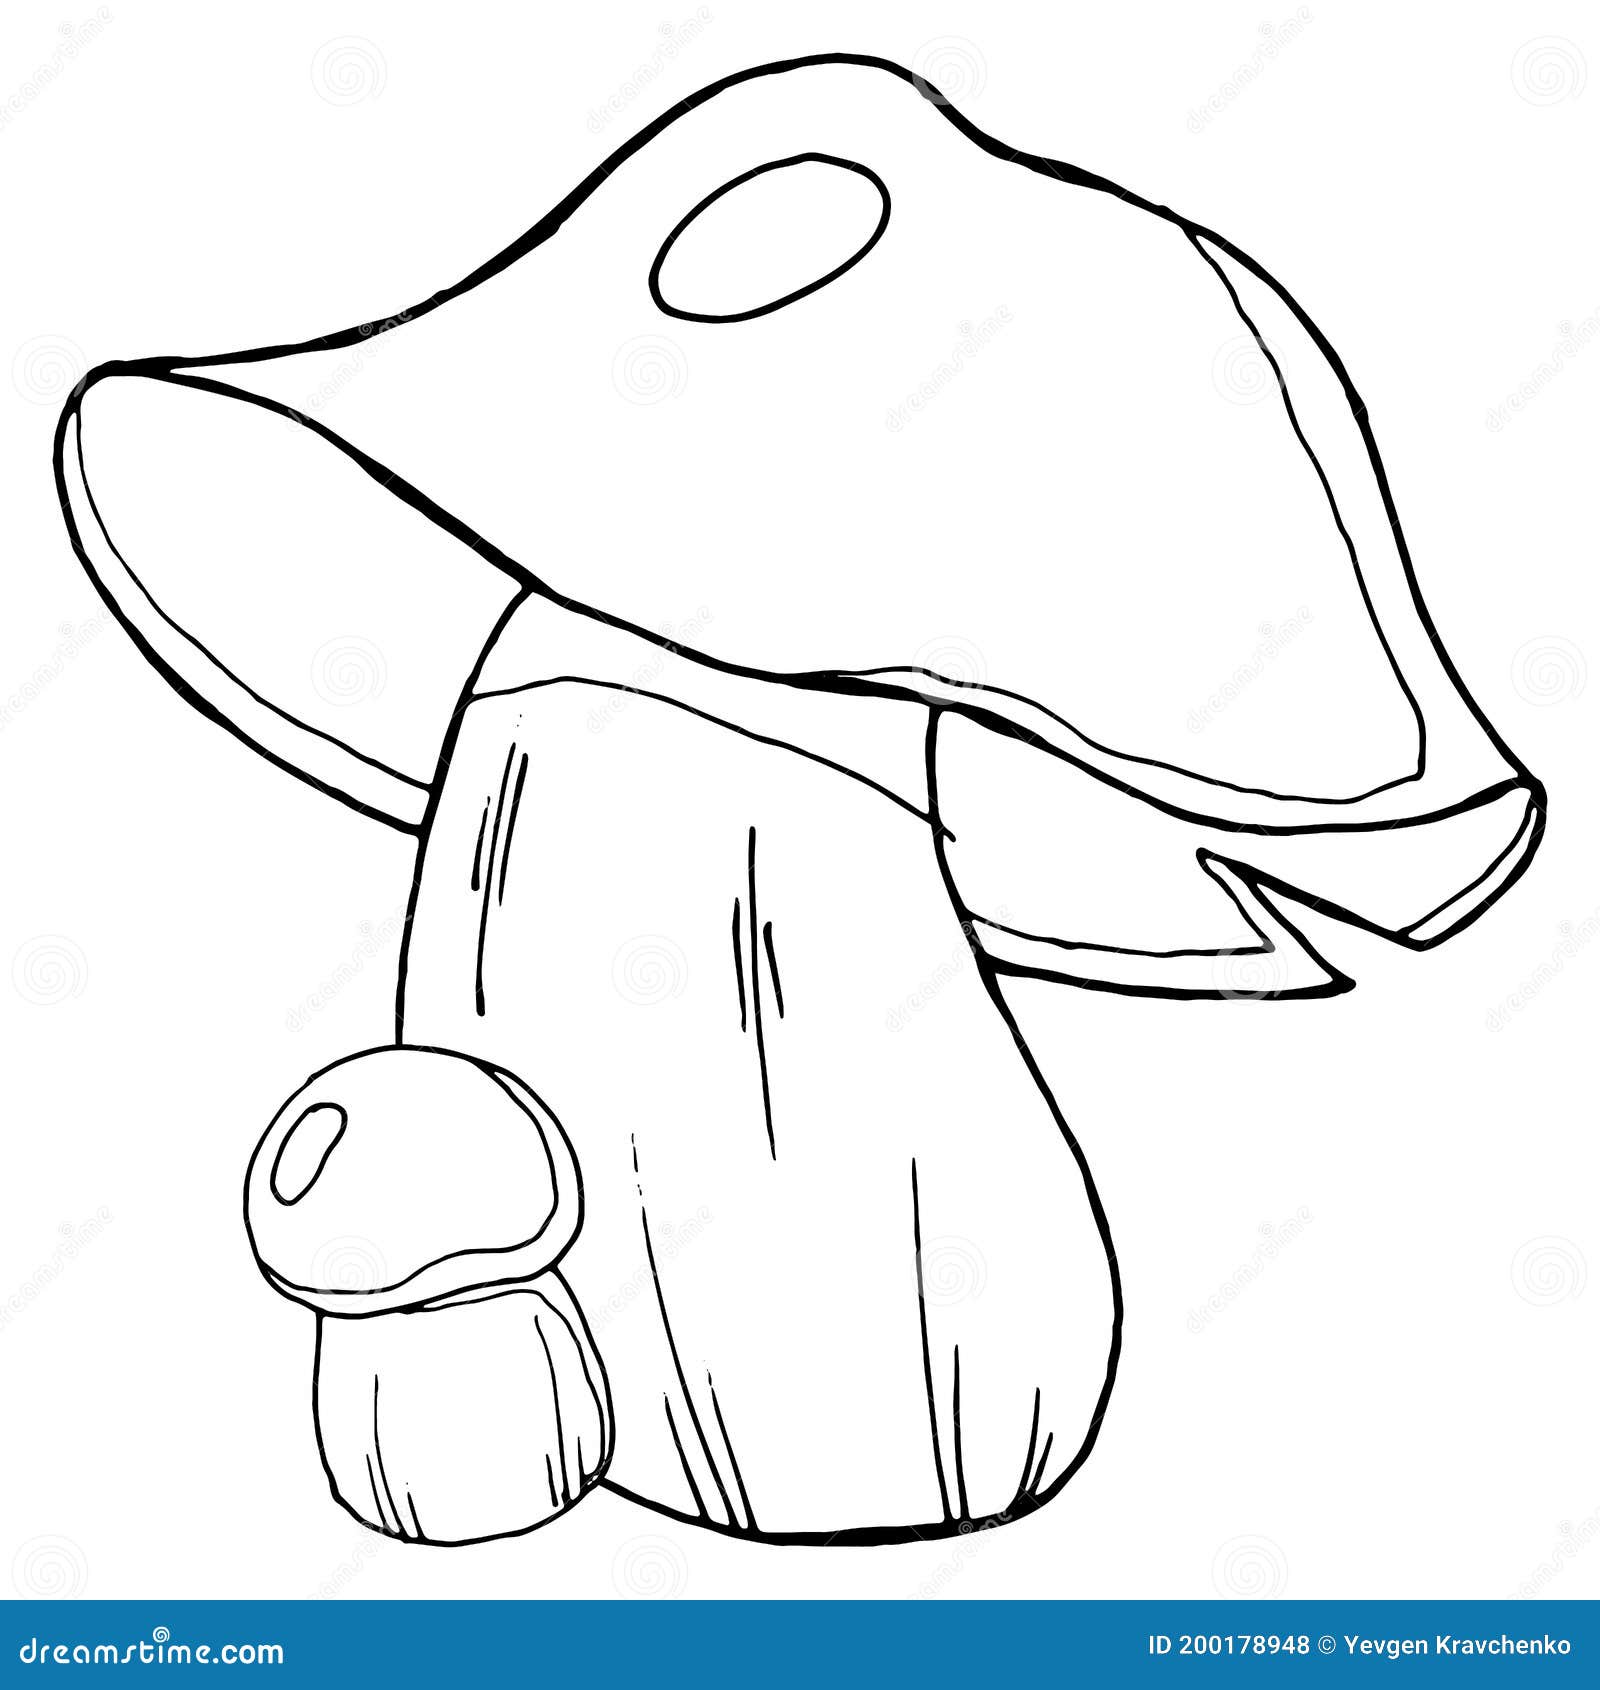 Mushroom Icon. Vector Illustration of Autumn Mushrooms. Hand Drawn ...